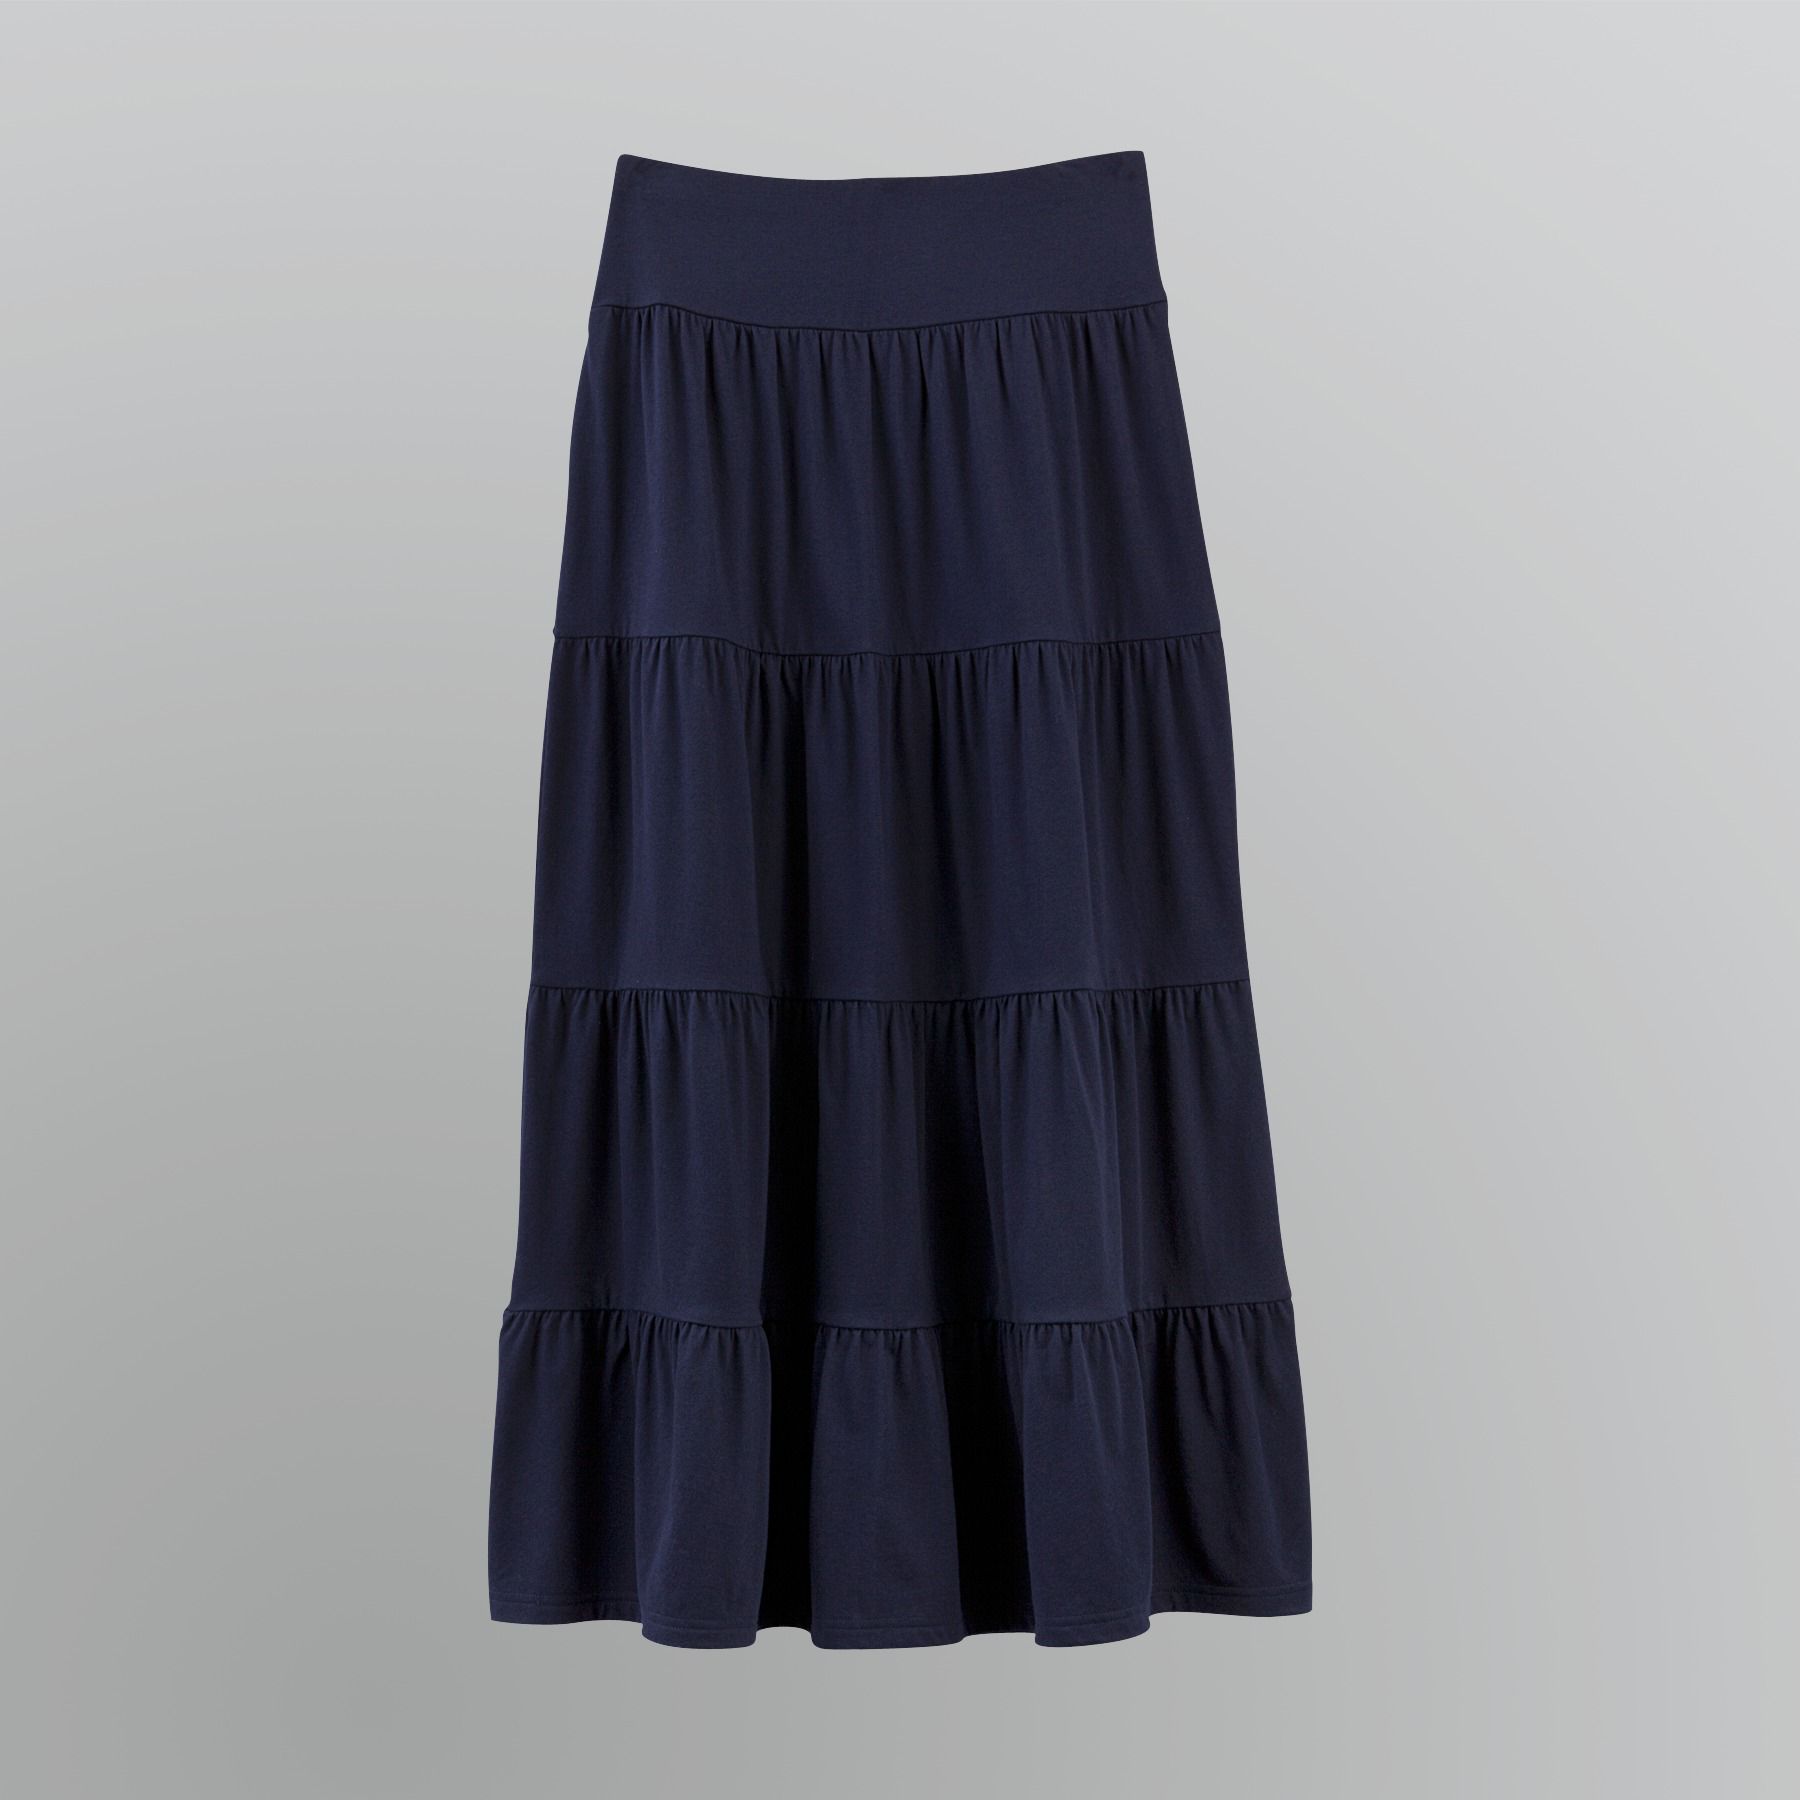 Basic Editions Women's Knit Maxi Skirt